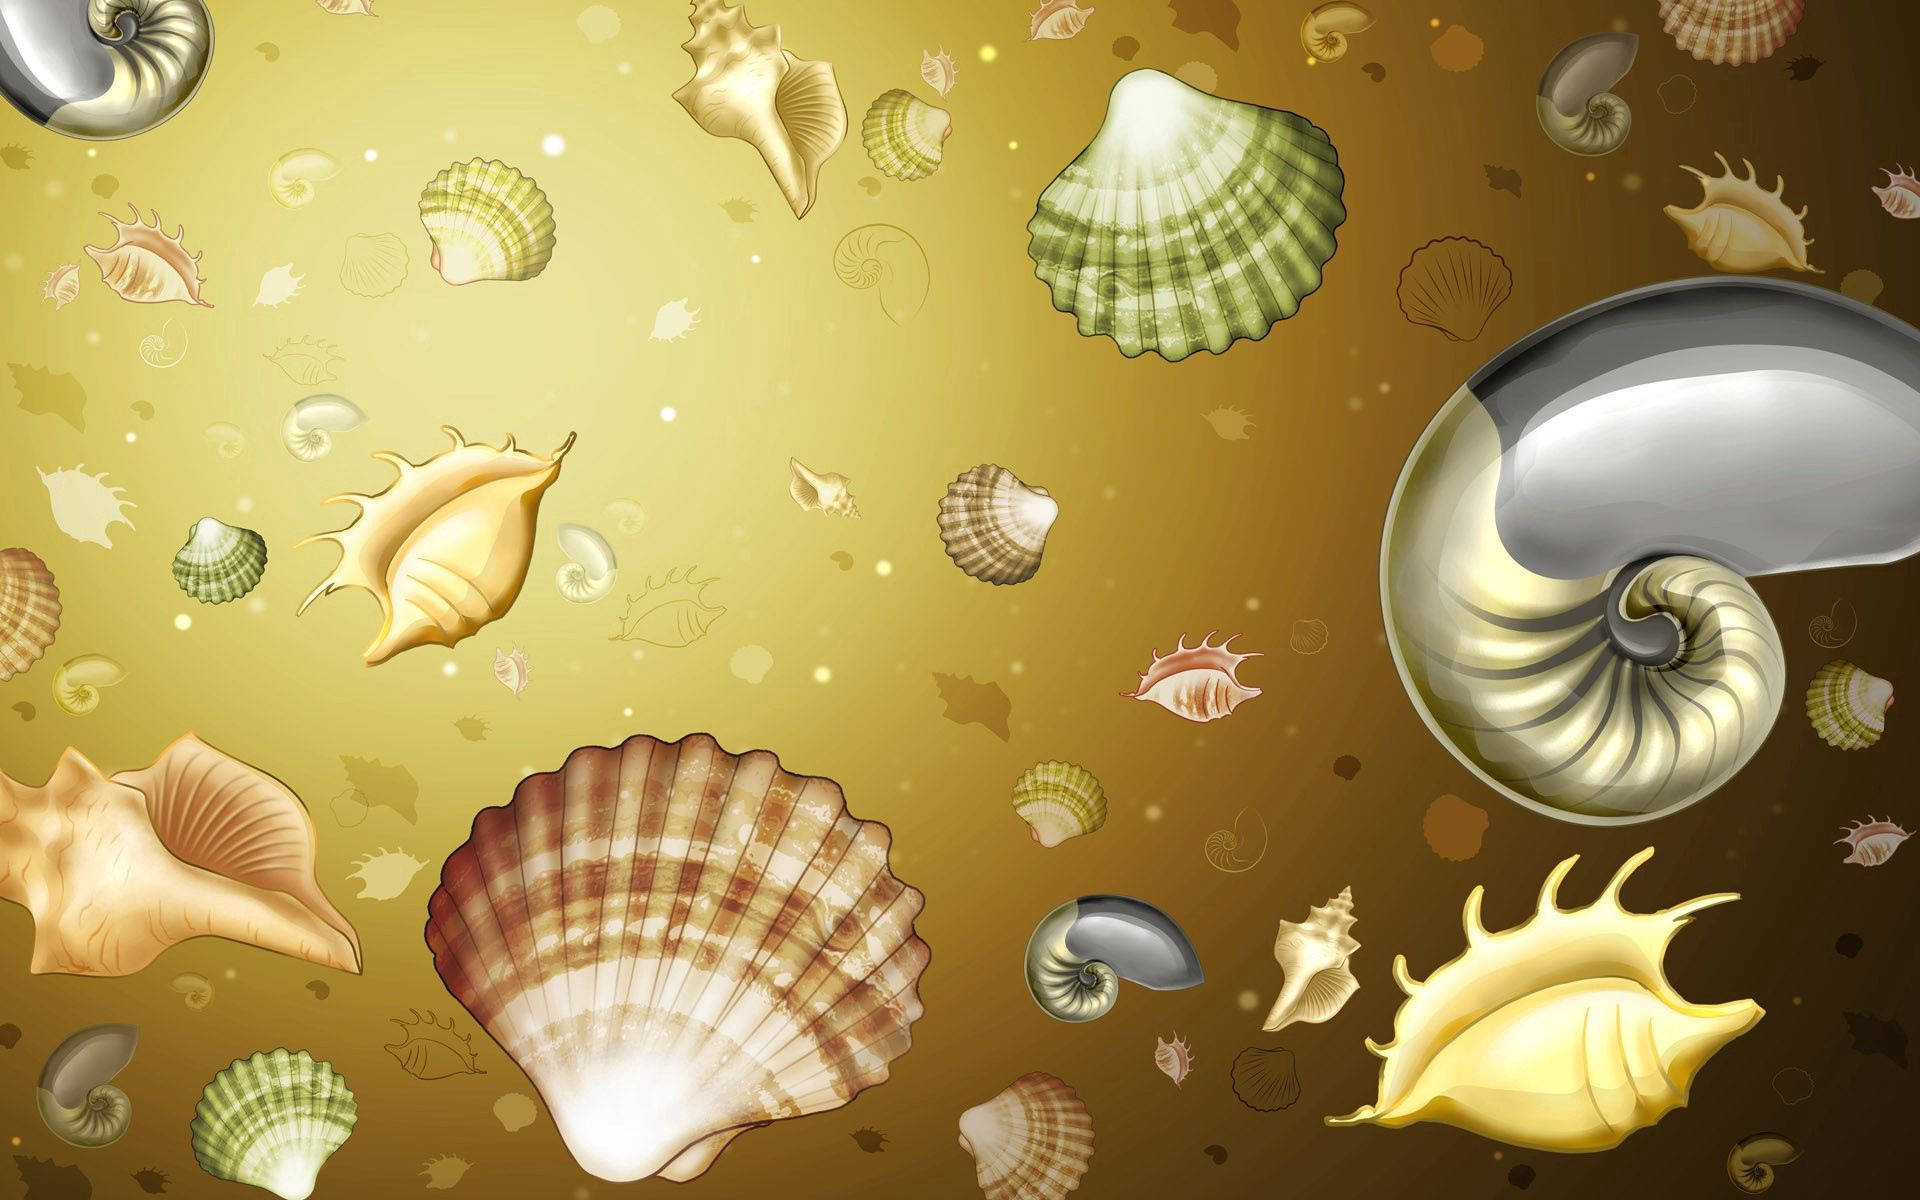 Animated Shells Image